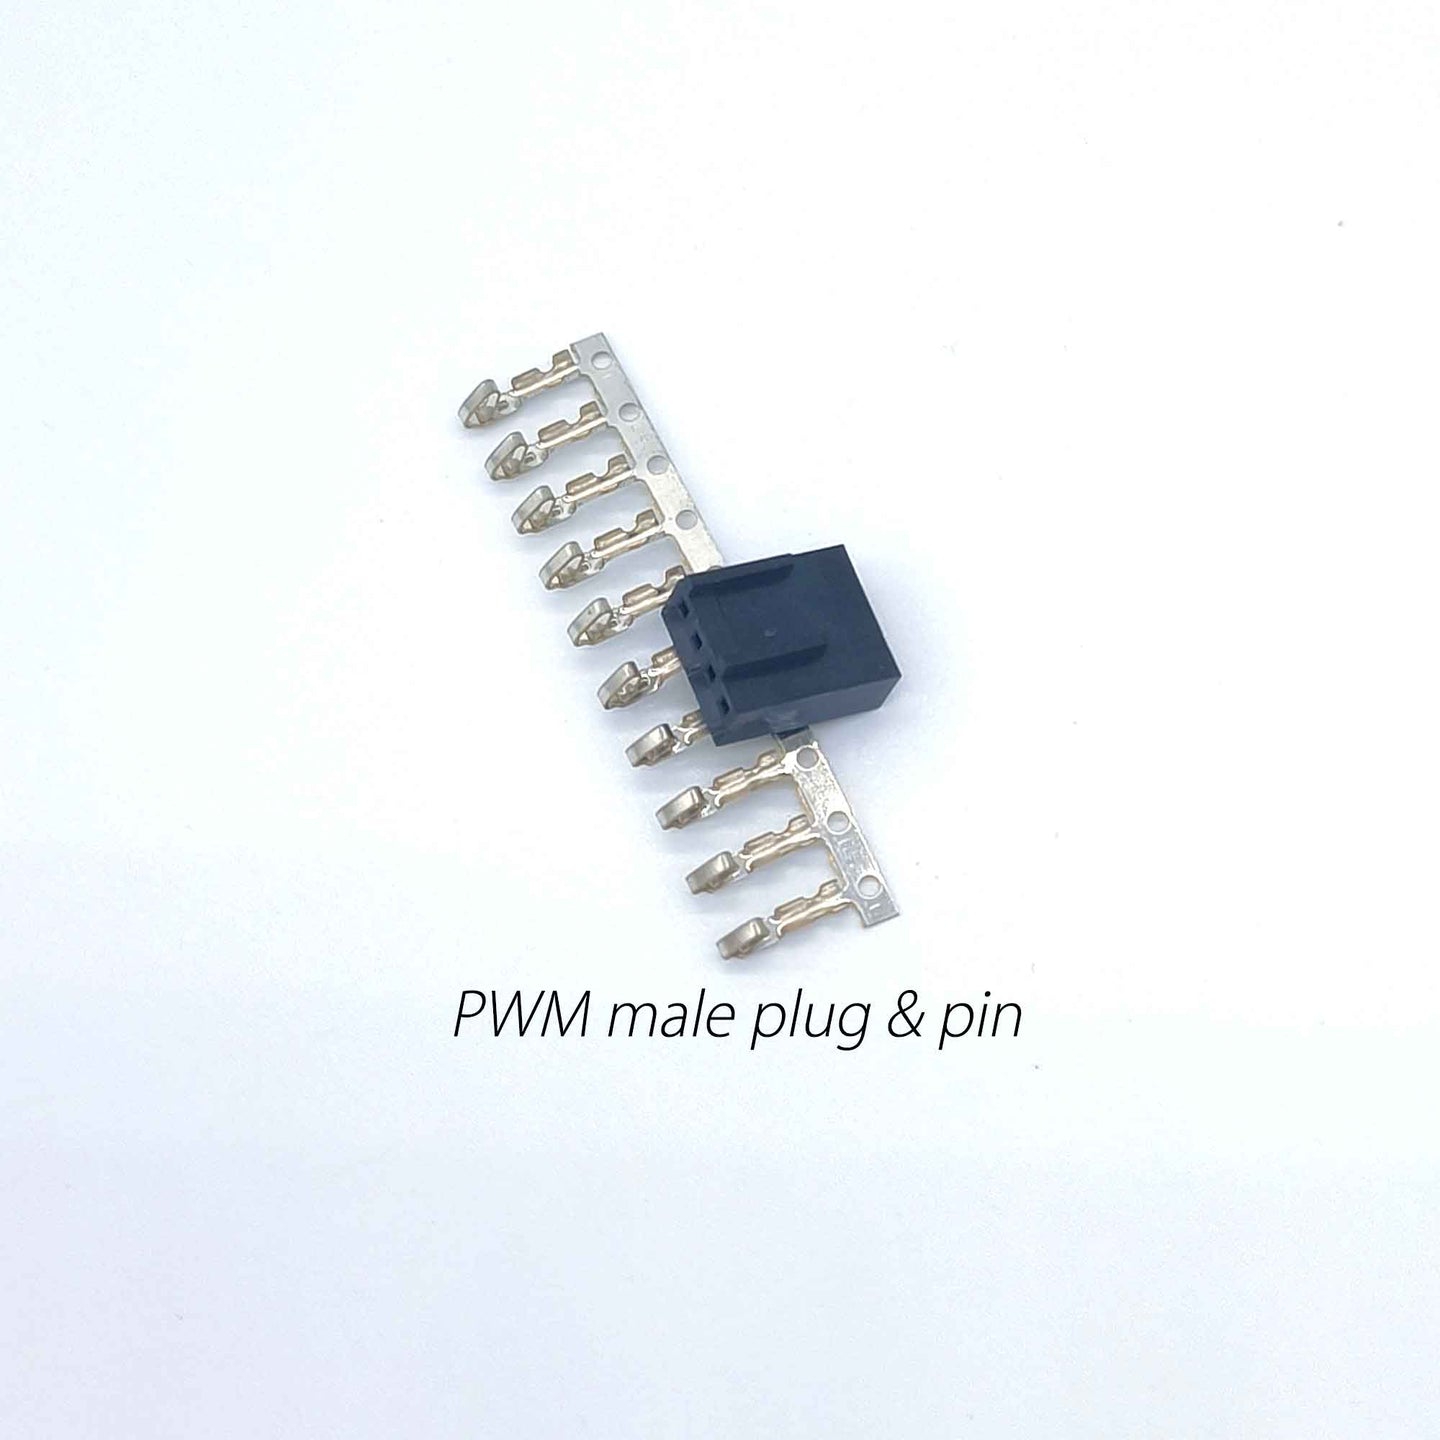 DIY PWM fan cable 4pin plugs female male plugs pins